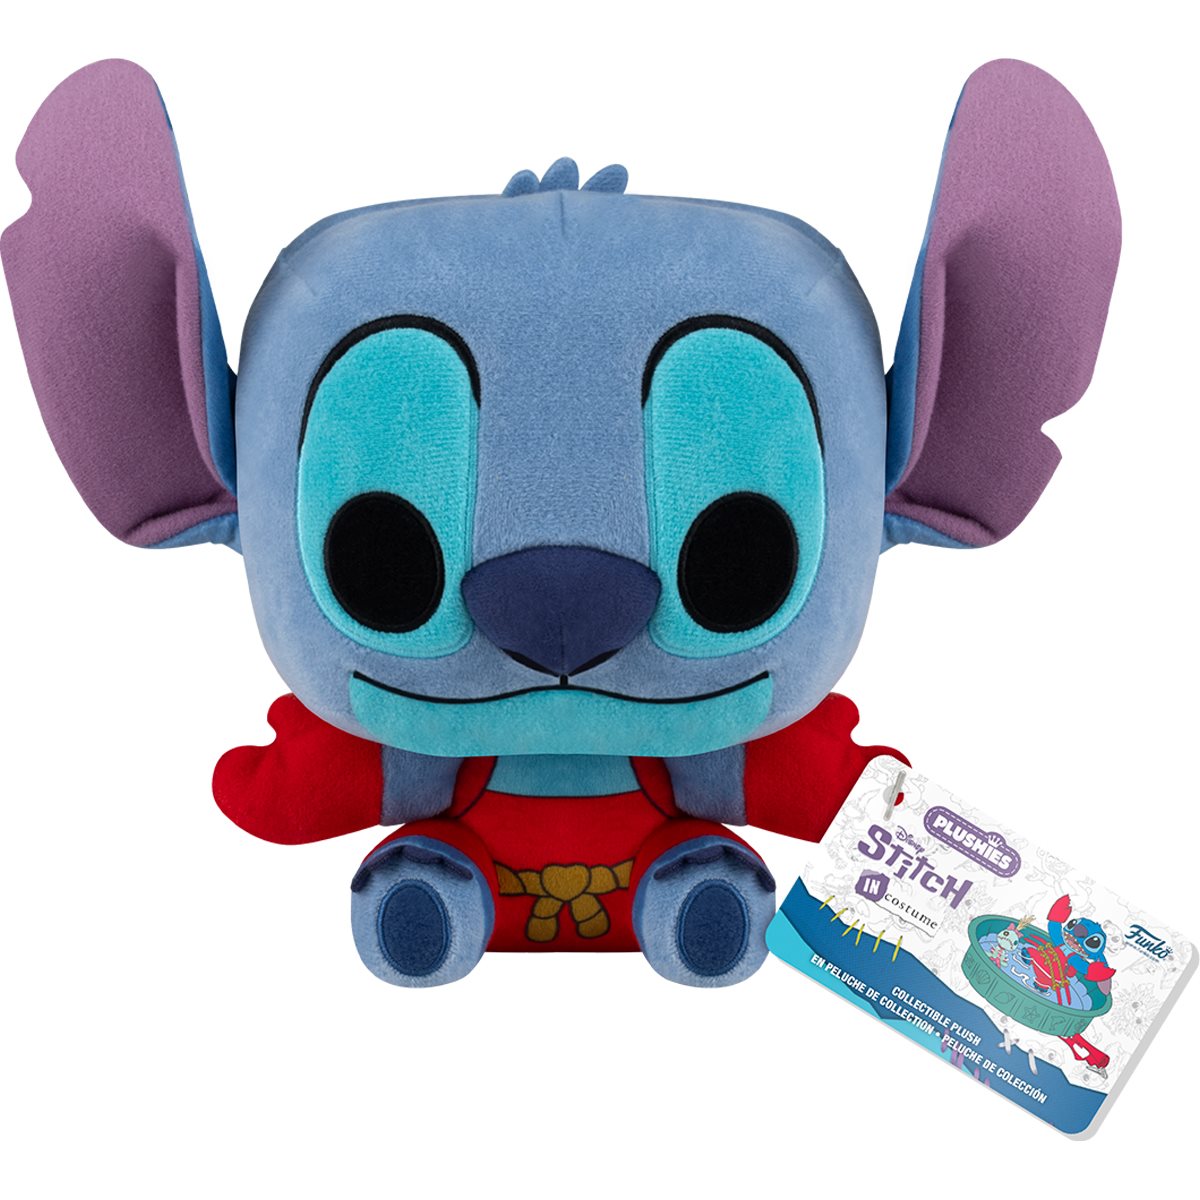 Funko Pop Plush: Disney Stitch In Costume - Stitch Como Sebastian 7 Pulgadas